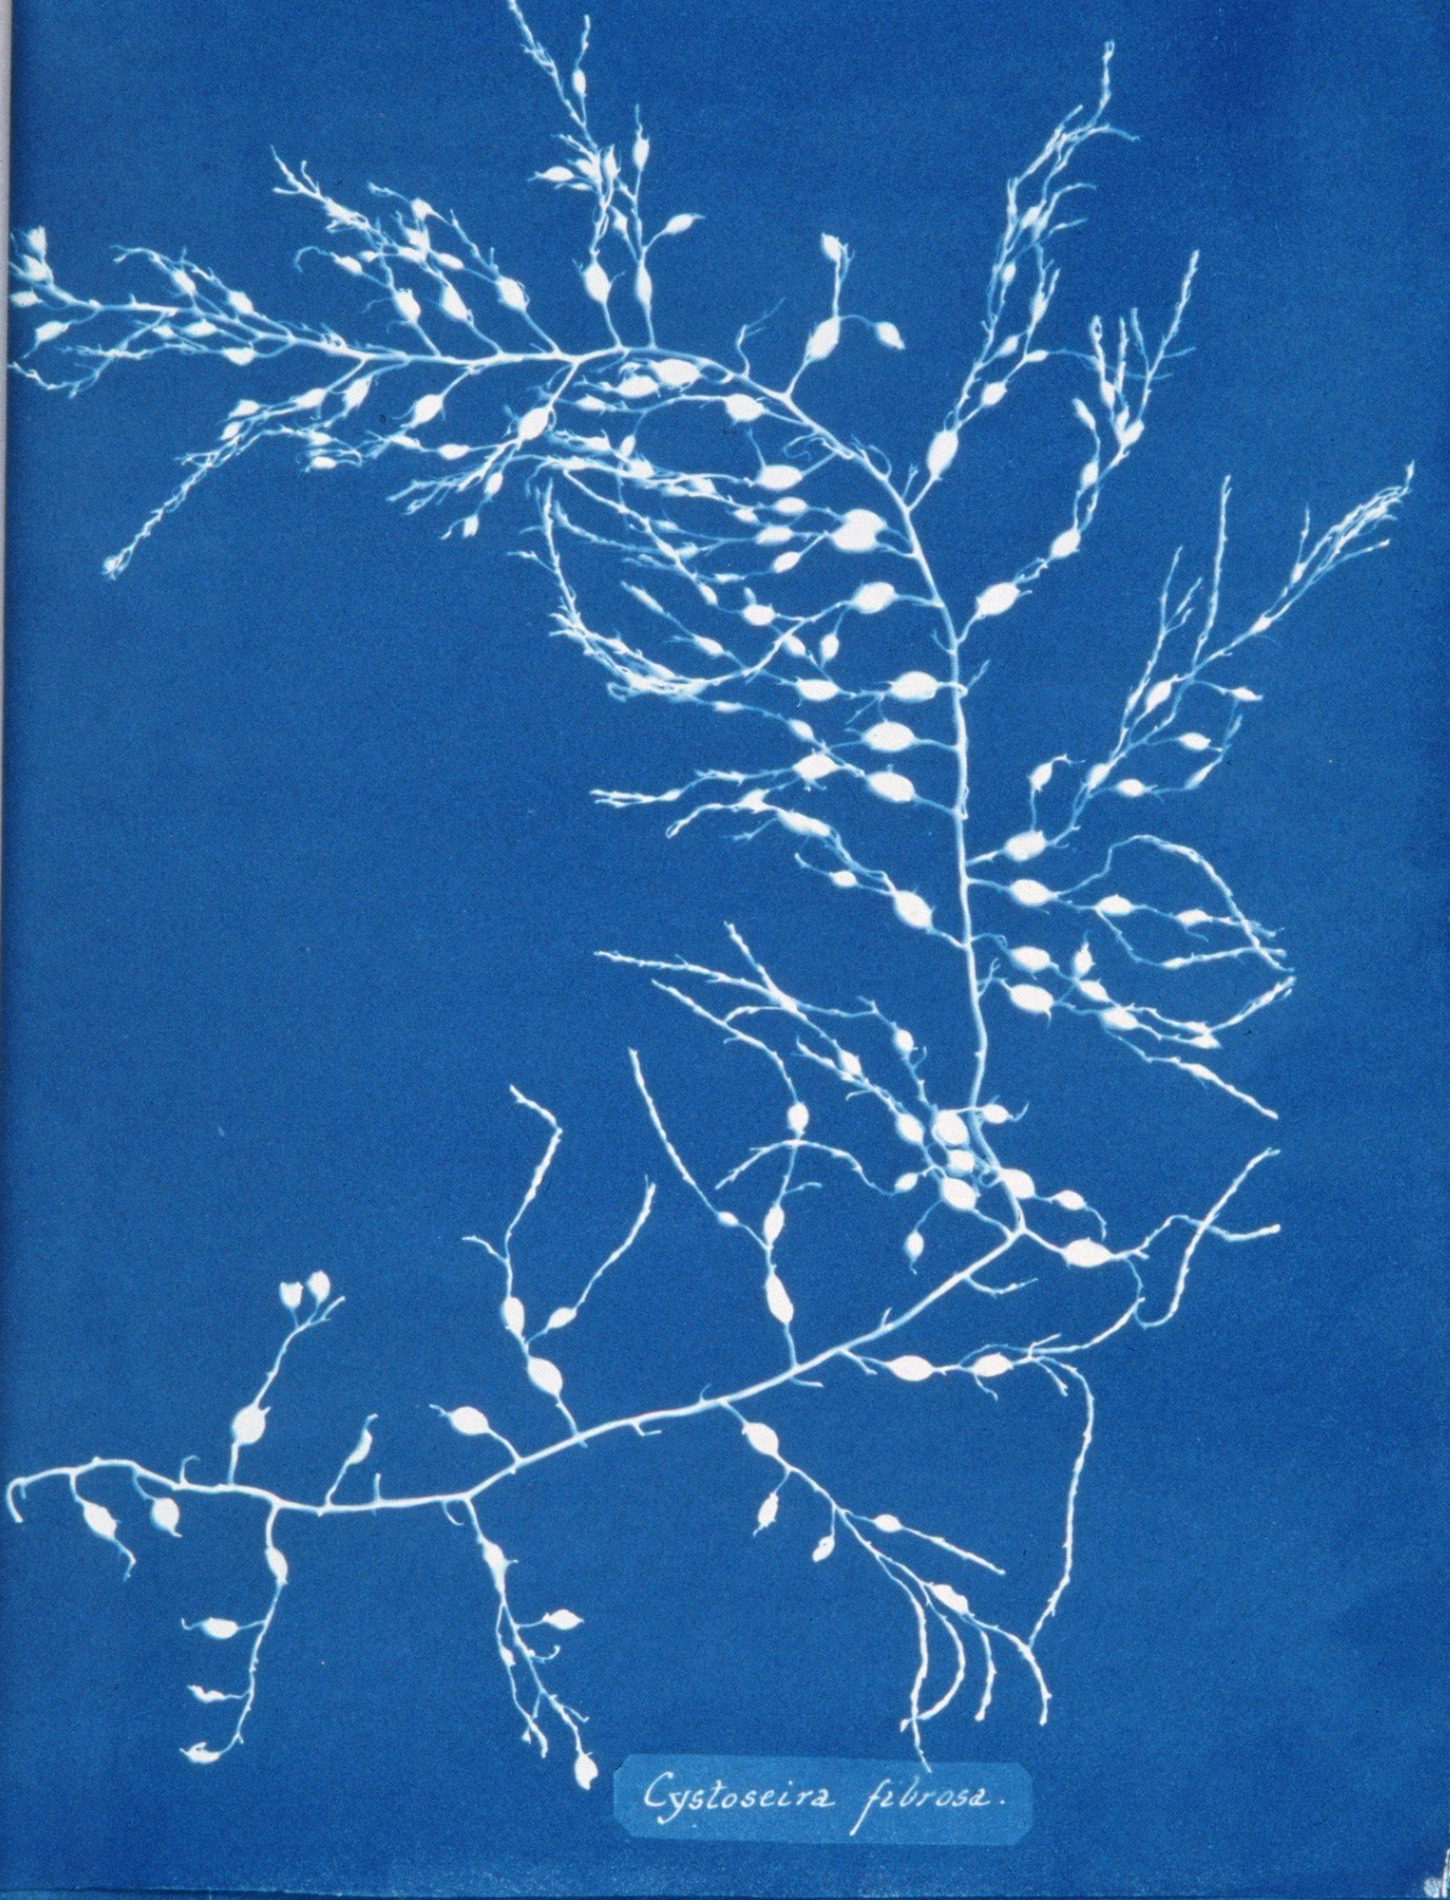 Cystoseira fibrosa. Courtesy of the Spencer Collection, The New York Public Library